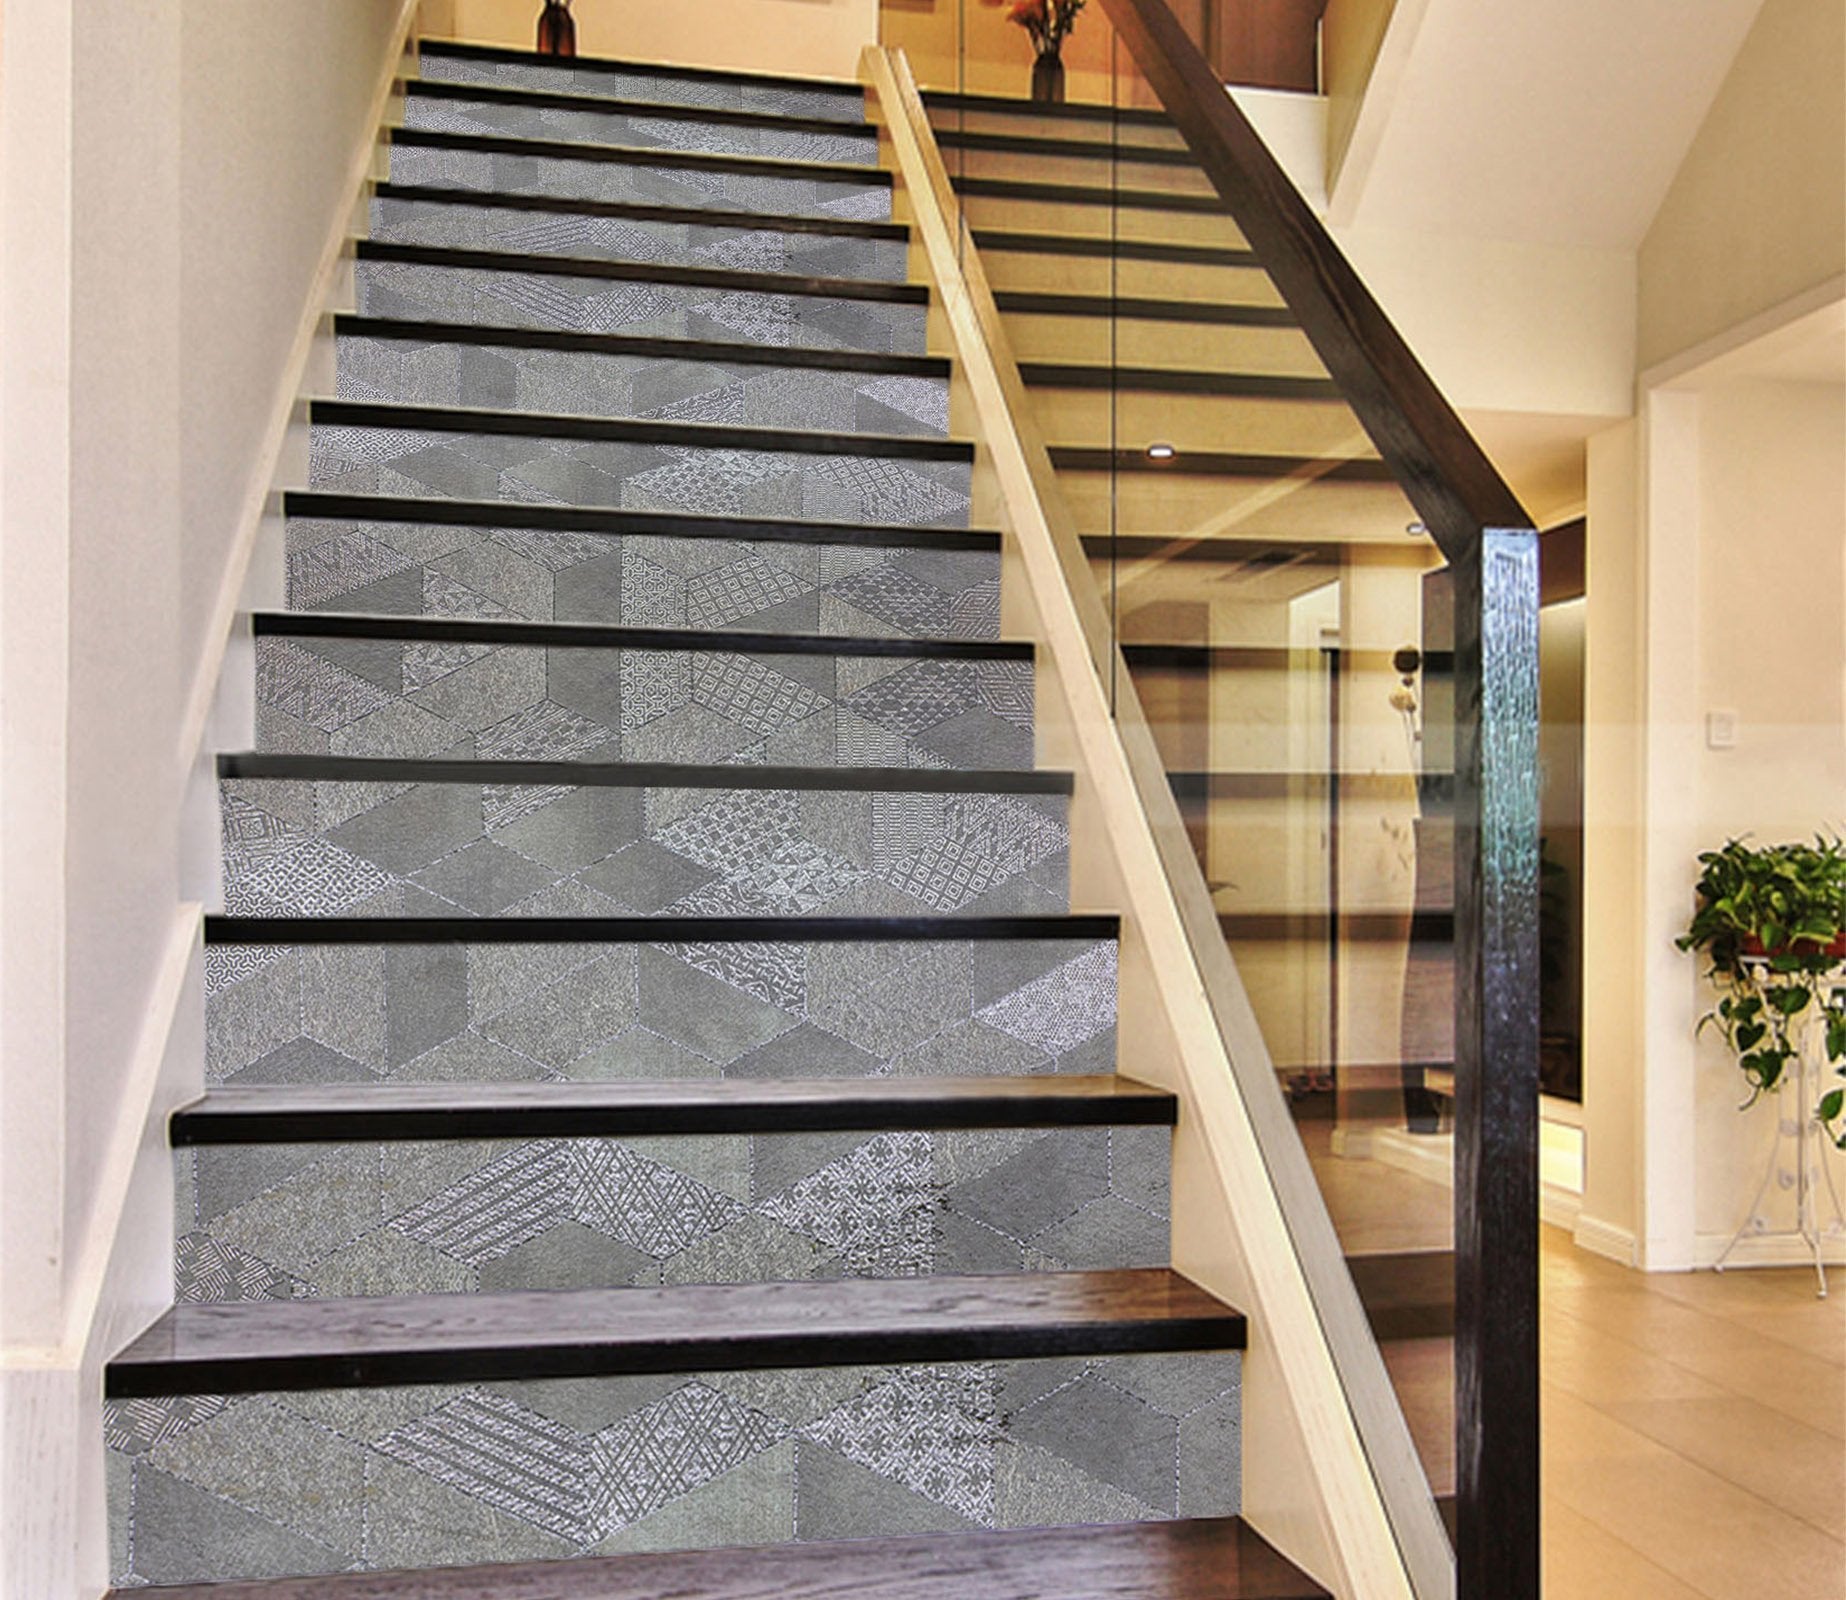 3D Trapezoidal Mosaic 9870 Marble Tile Texture Stair Risers Wallpaper AJ Wallpaper 